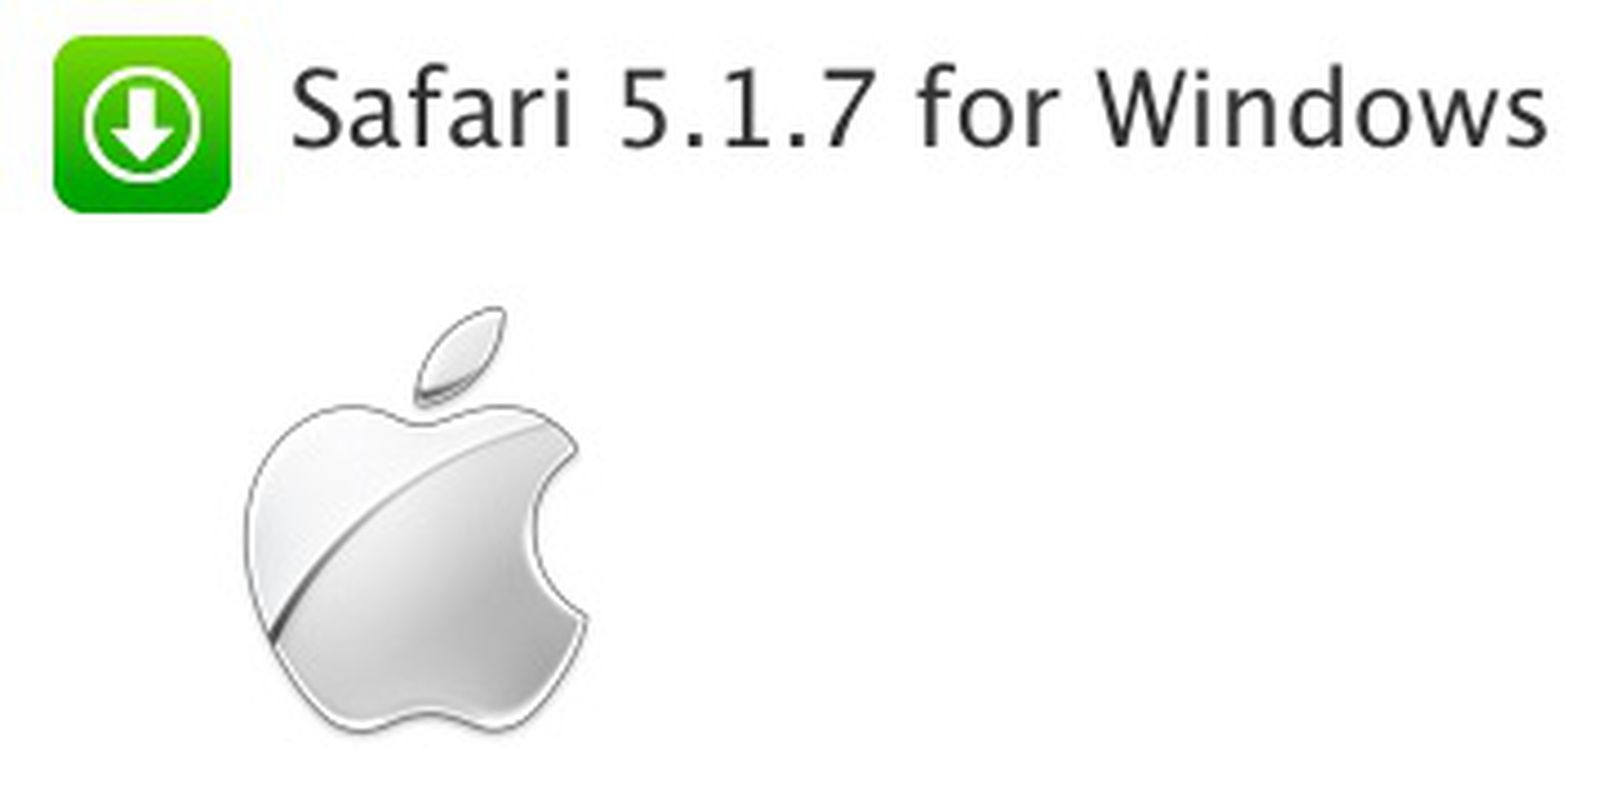 safari windows 5.1.7